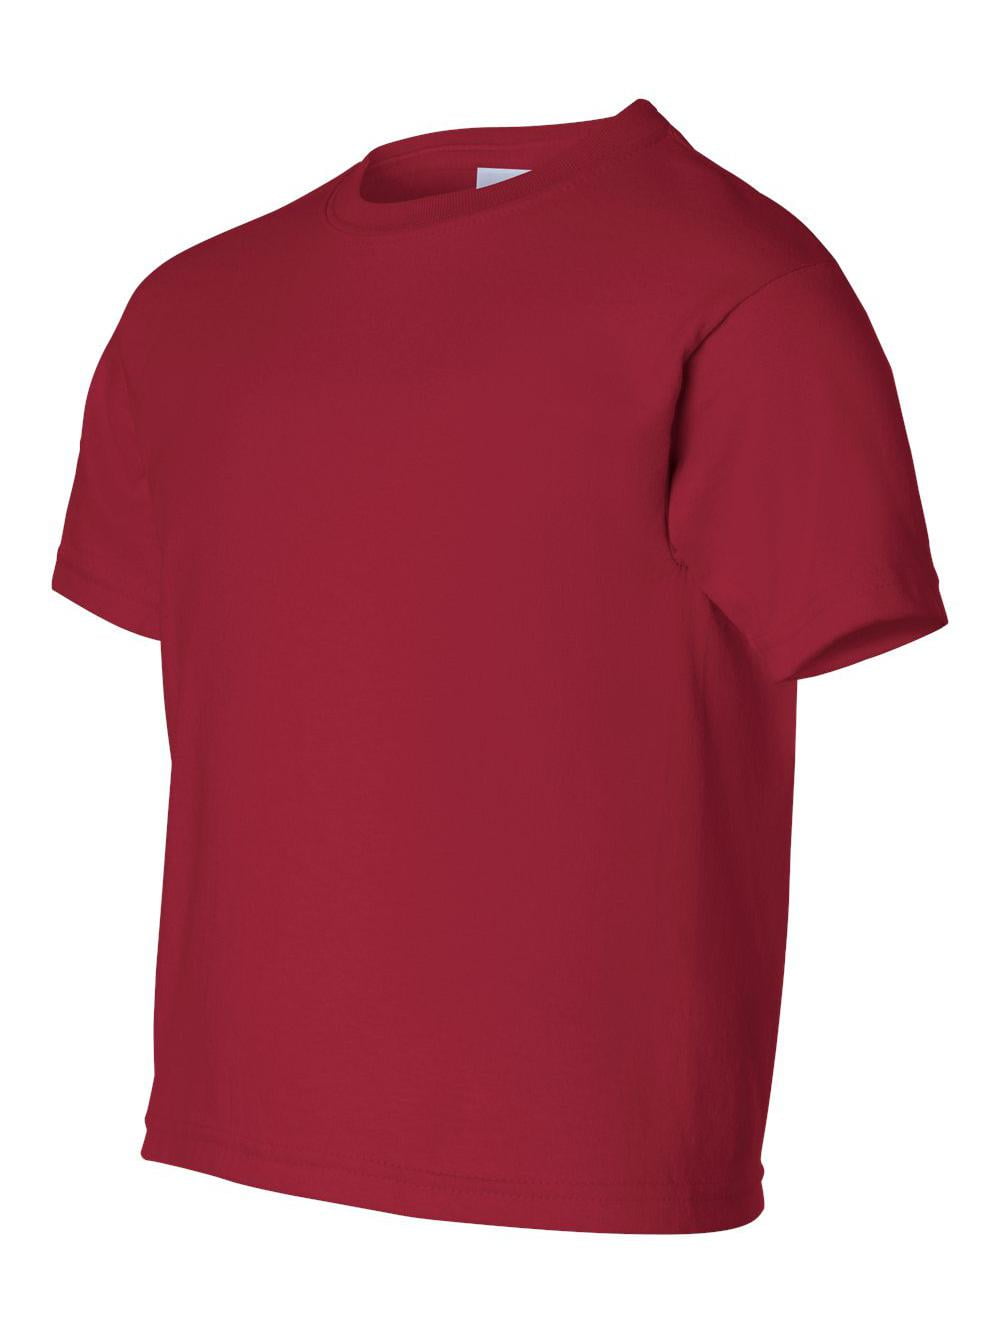 Cotton - 2000B - T-Shirt Youth - - Ultra S Cardinal Size: Red Gildan